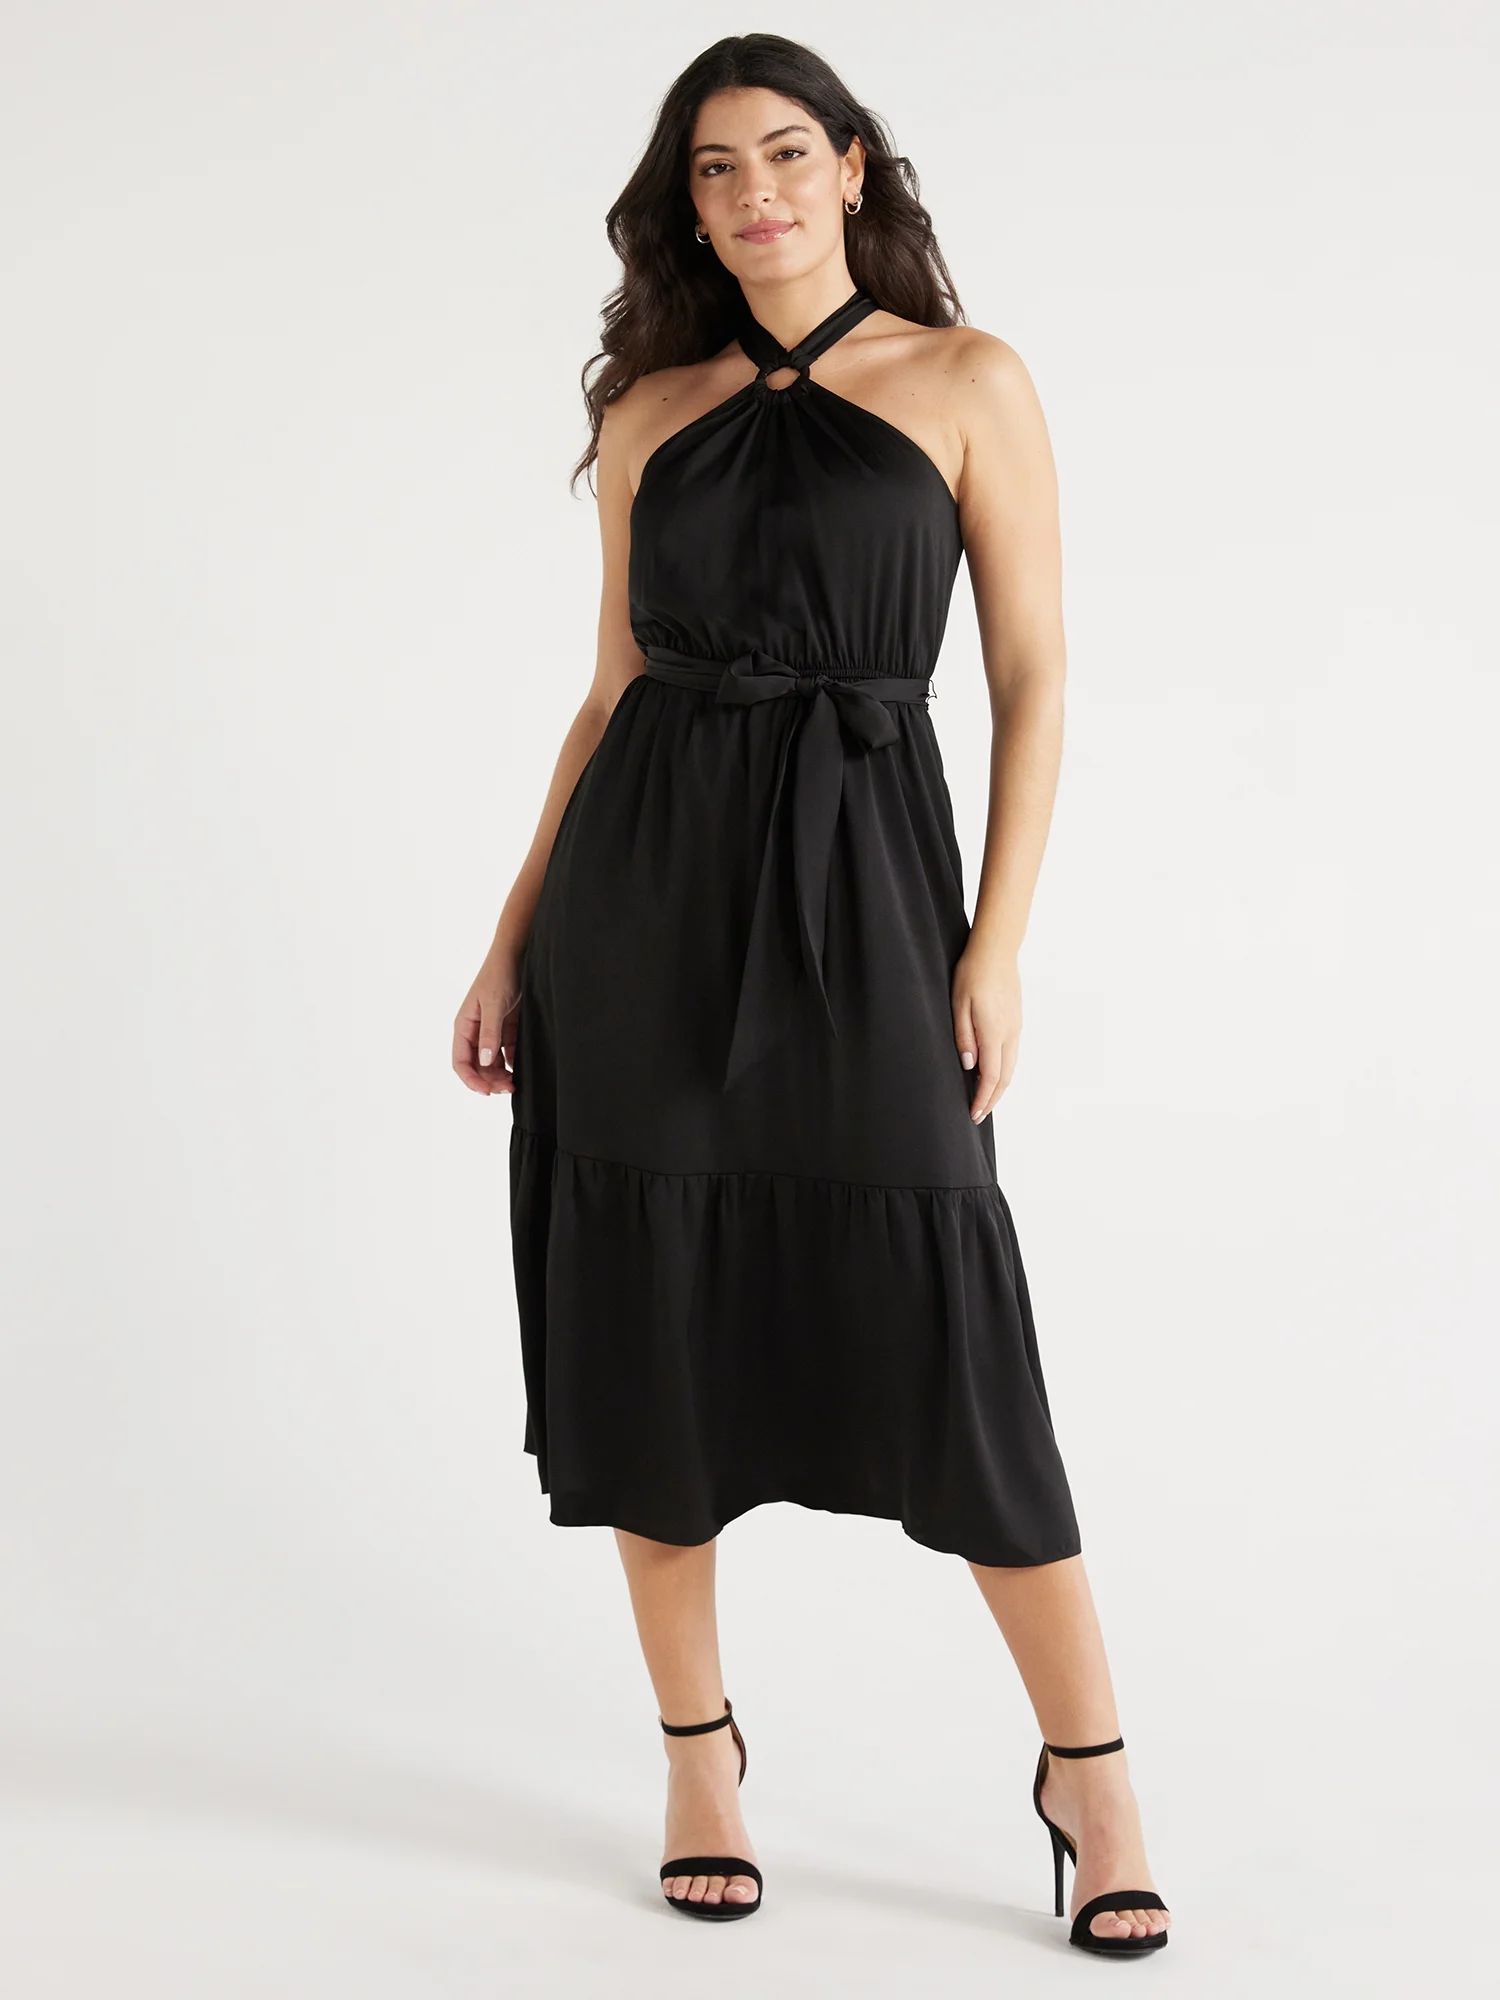 Sofia Jeans Women's O-Ring Halter Dress, Mid Calf Length, Sizes XS-XXXL | Walmart (US)